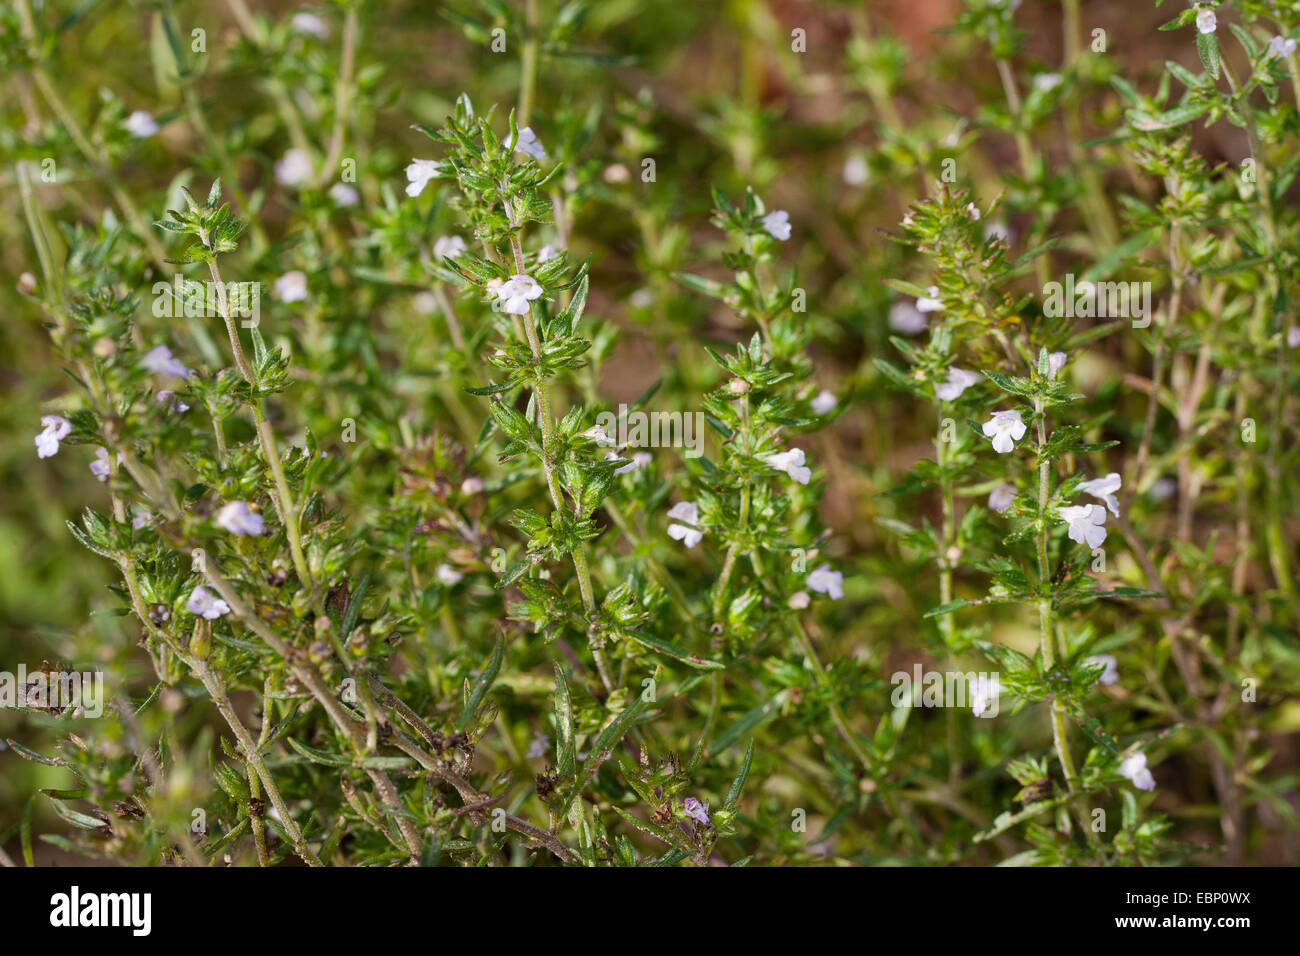 Summer savory, Calamint (Satureja hortensis), blooming Stock Photo